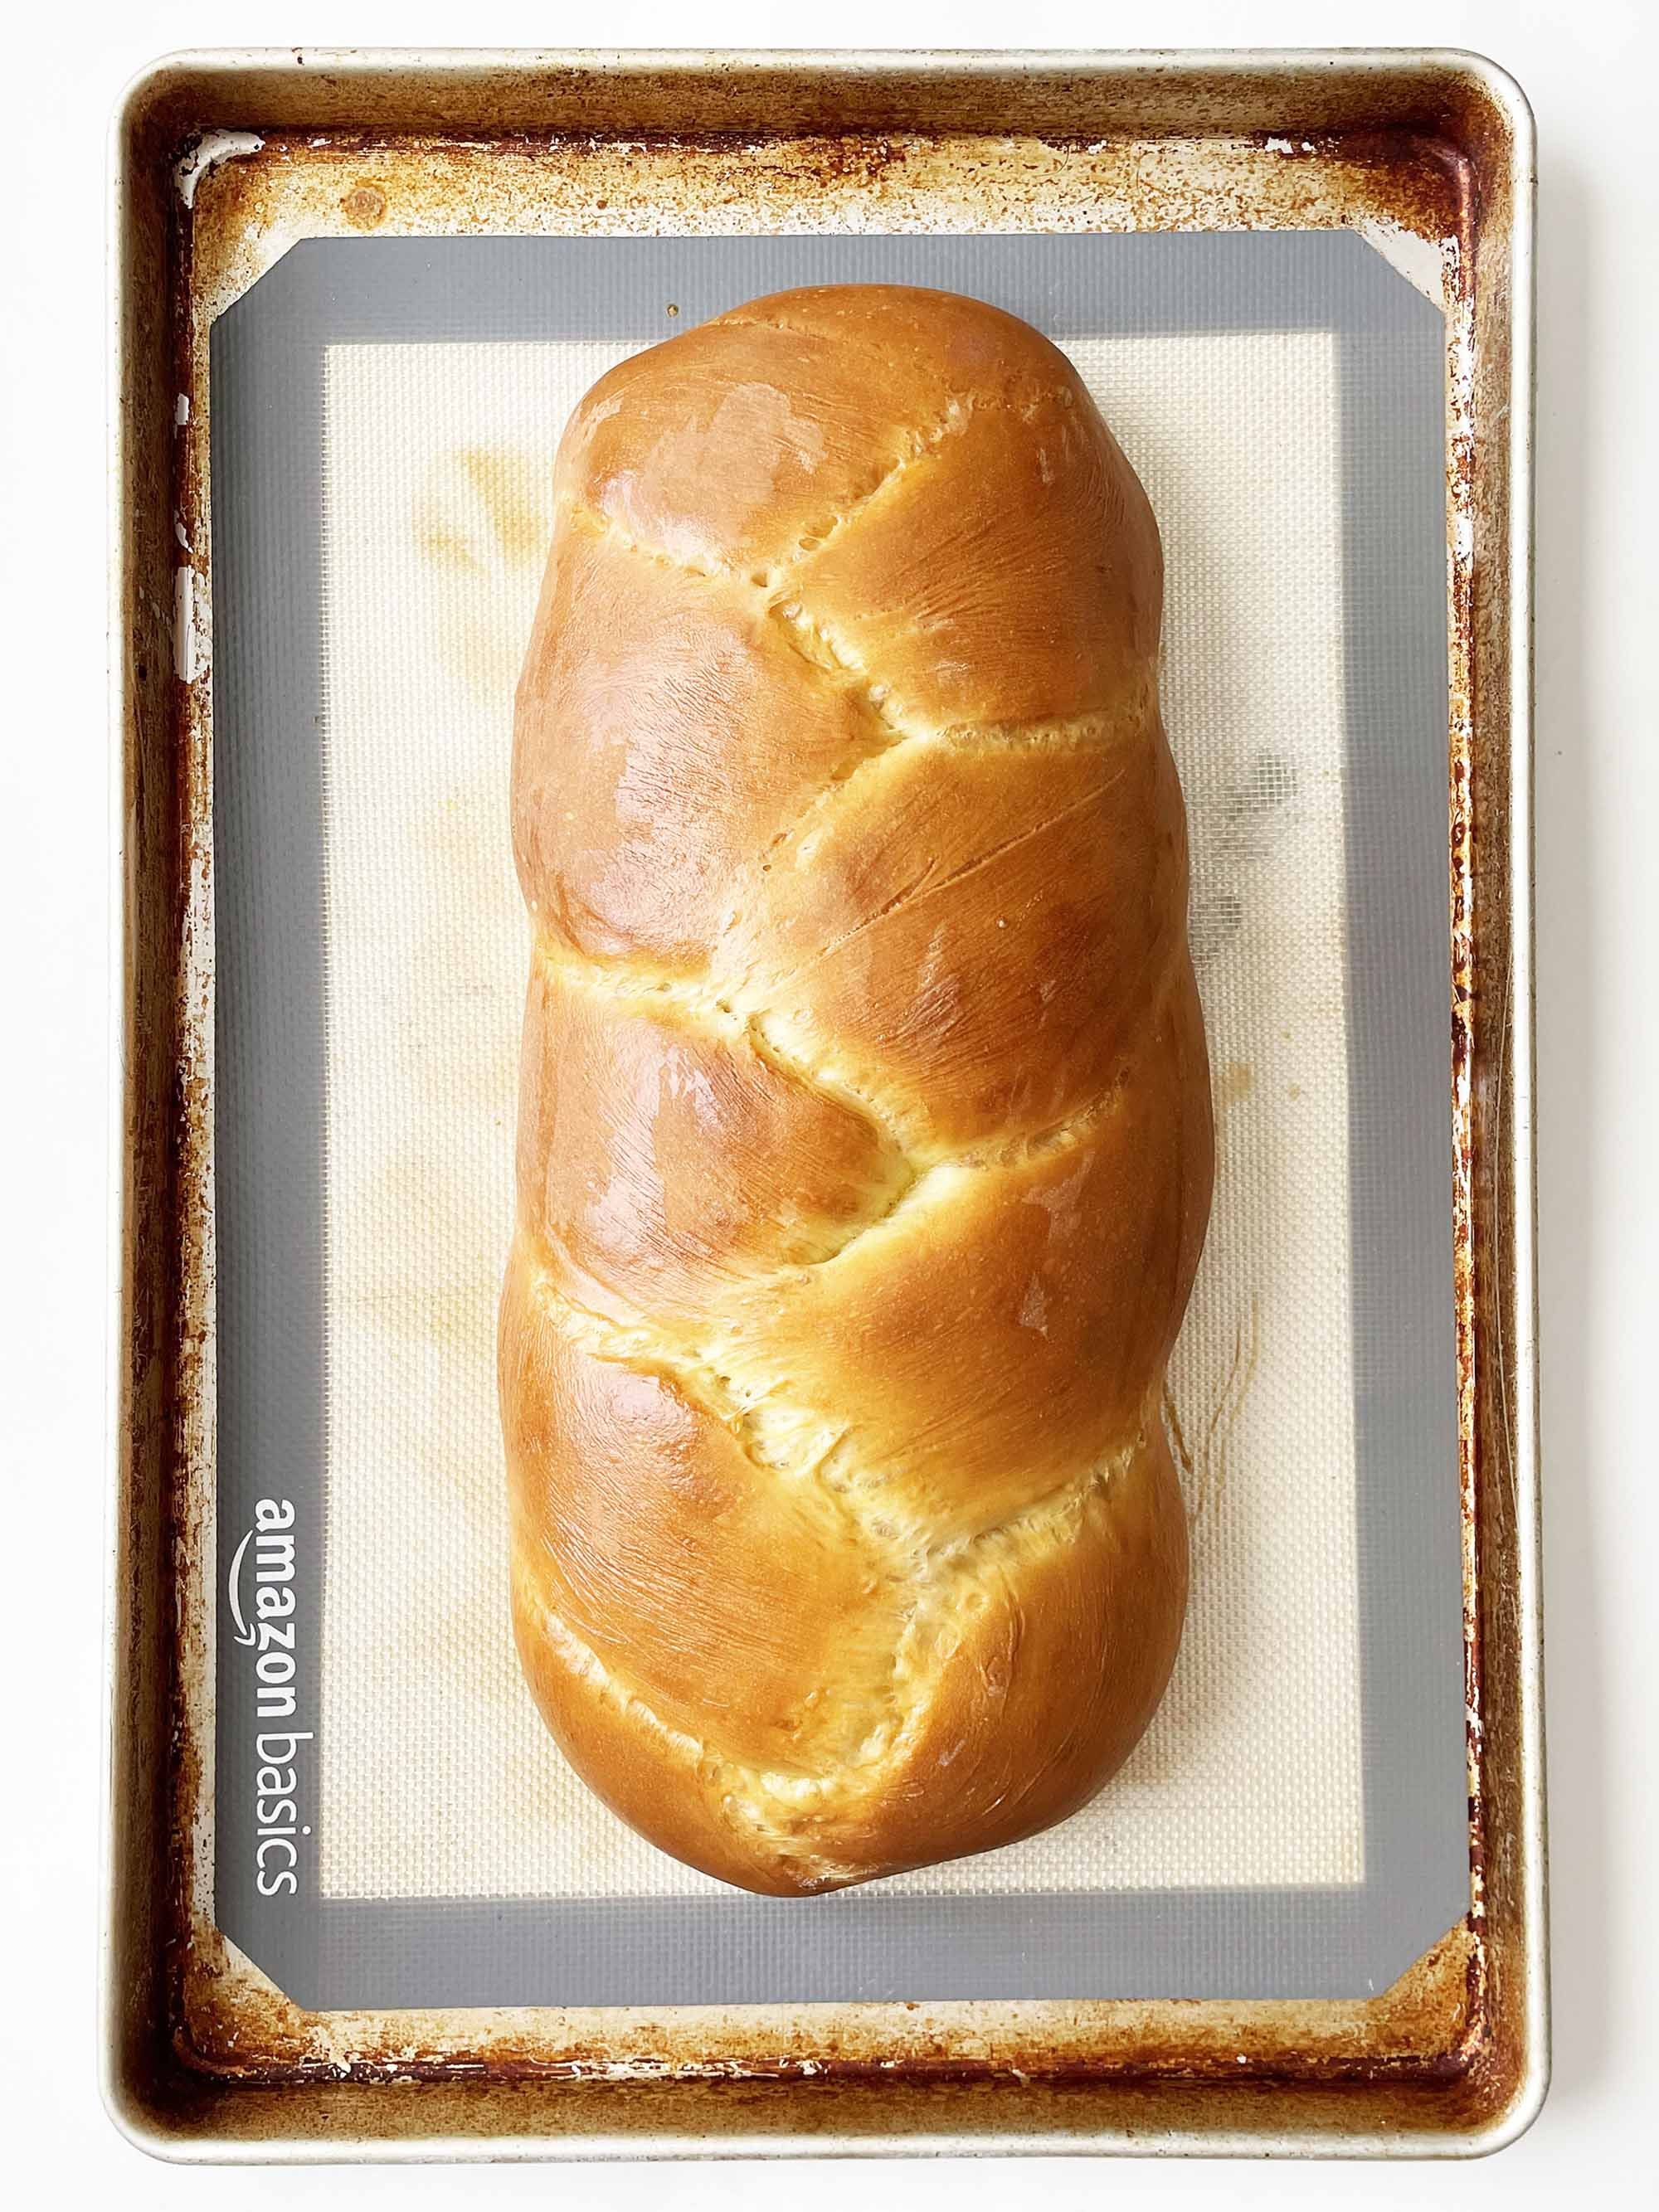 bread-machine-challah11.jpg